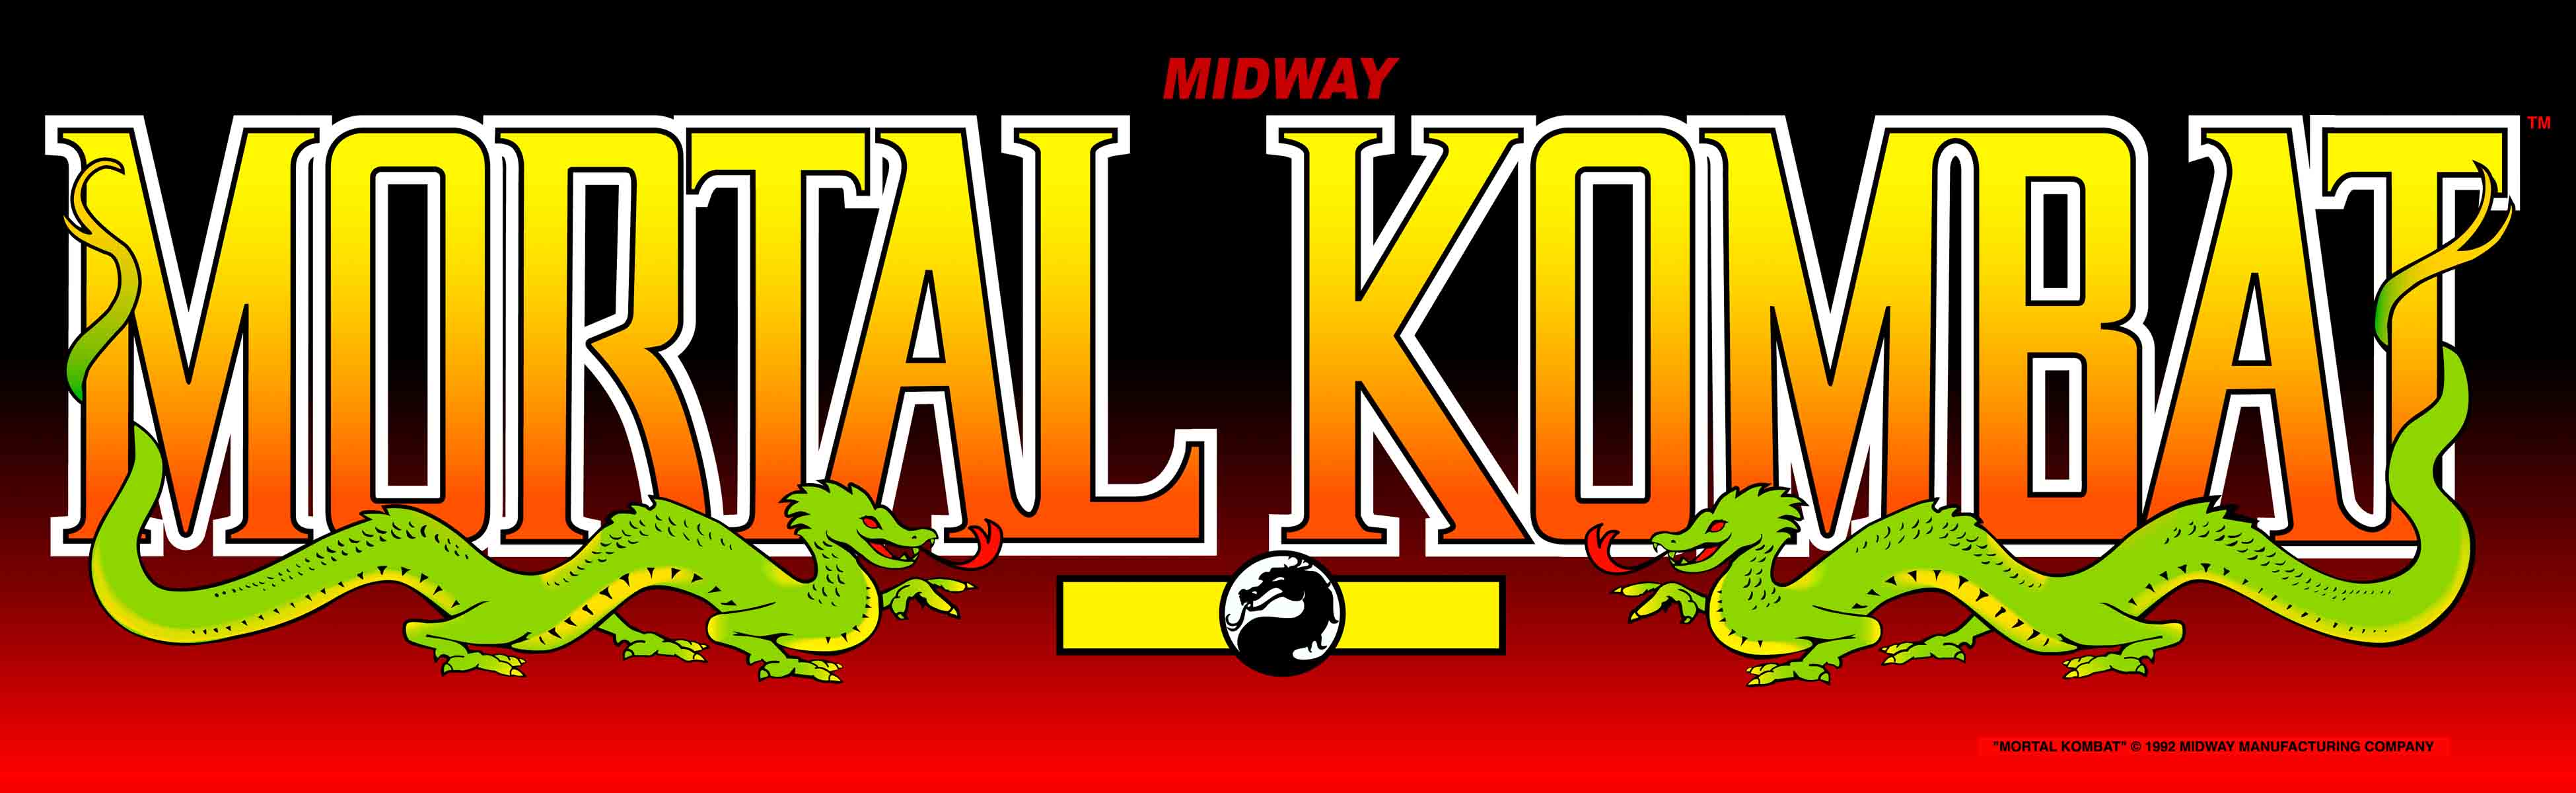 download mortal kombat arcade edition for free